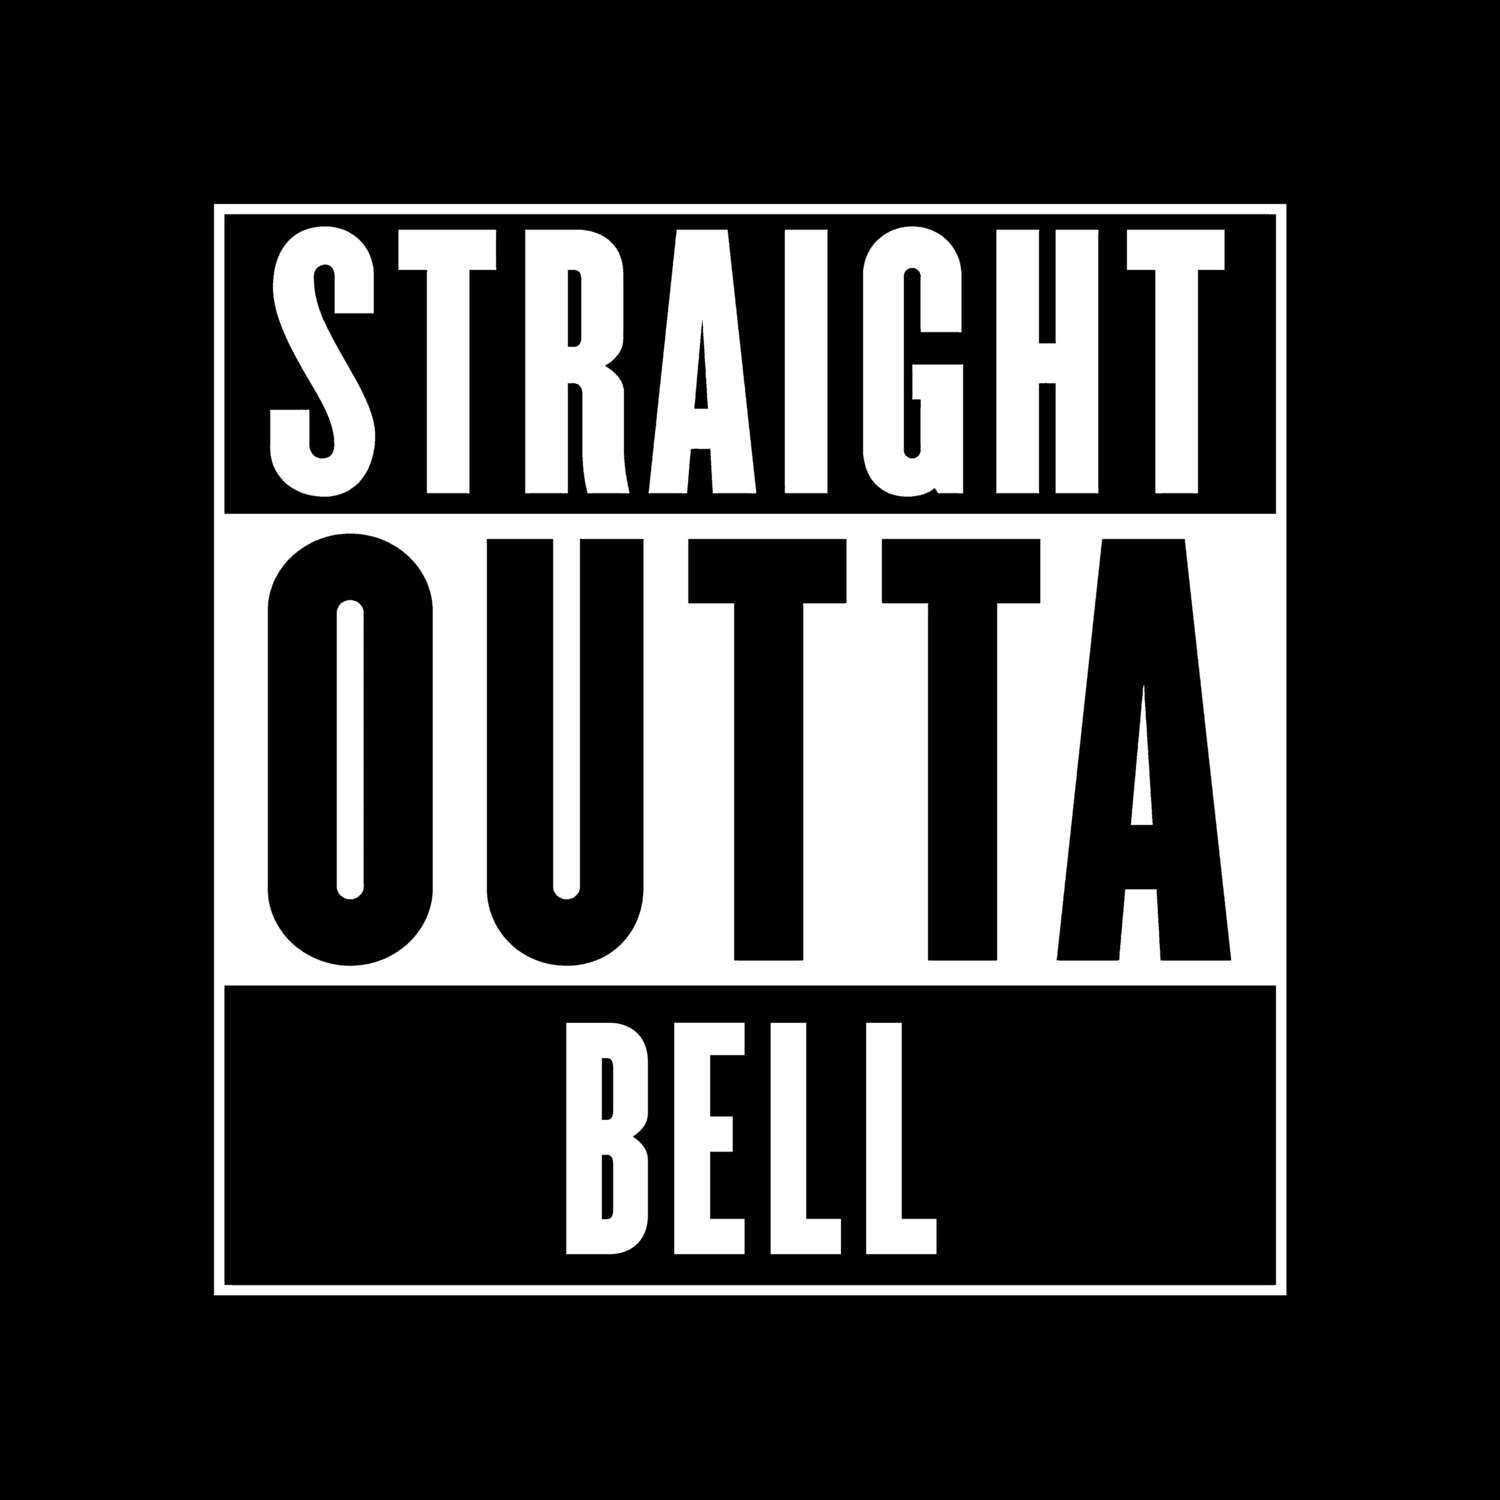 Bell T-Shirt »Straight Outta«